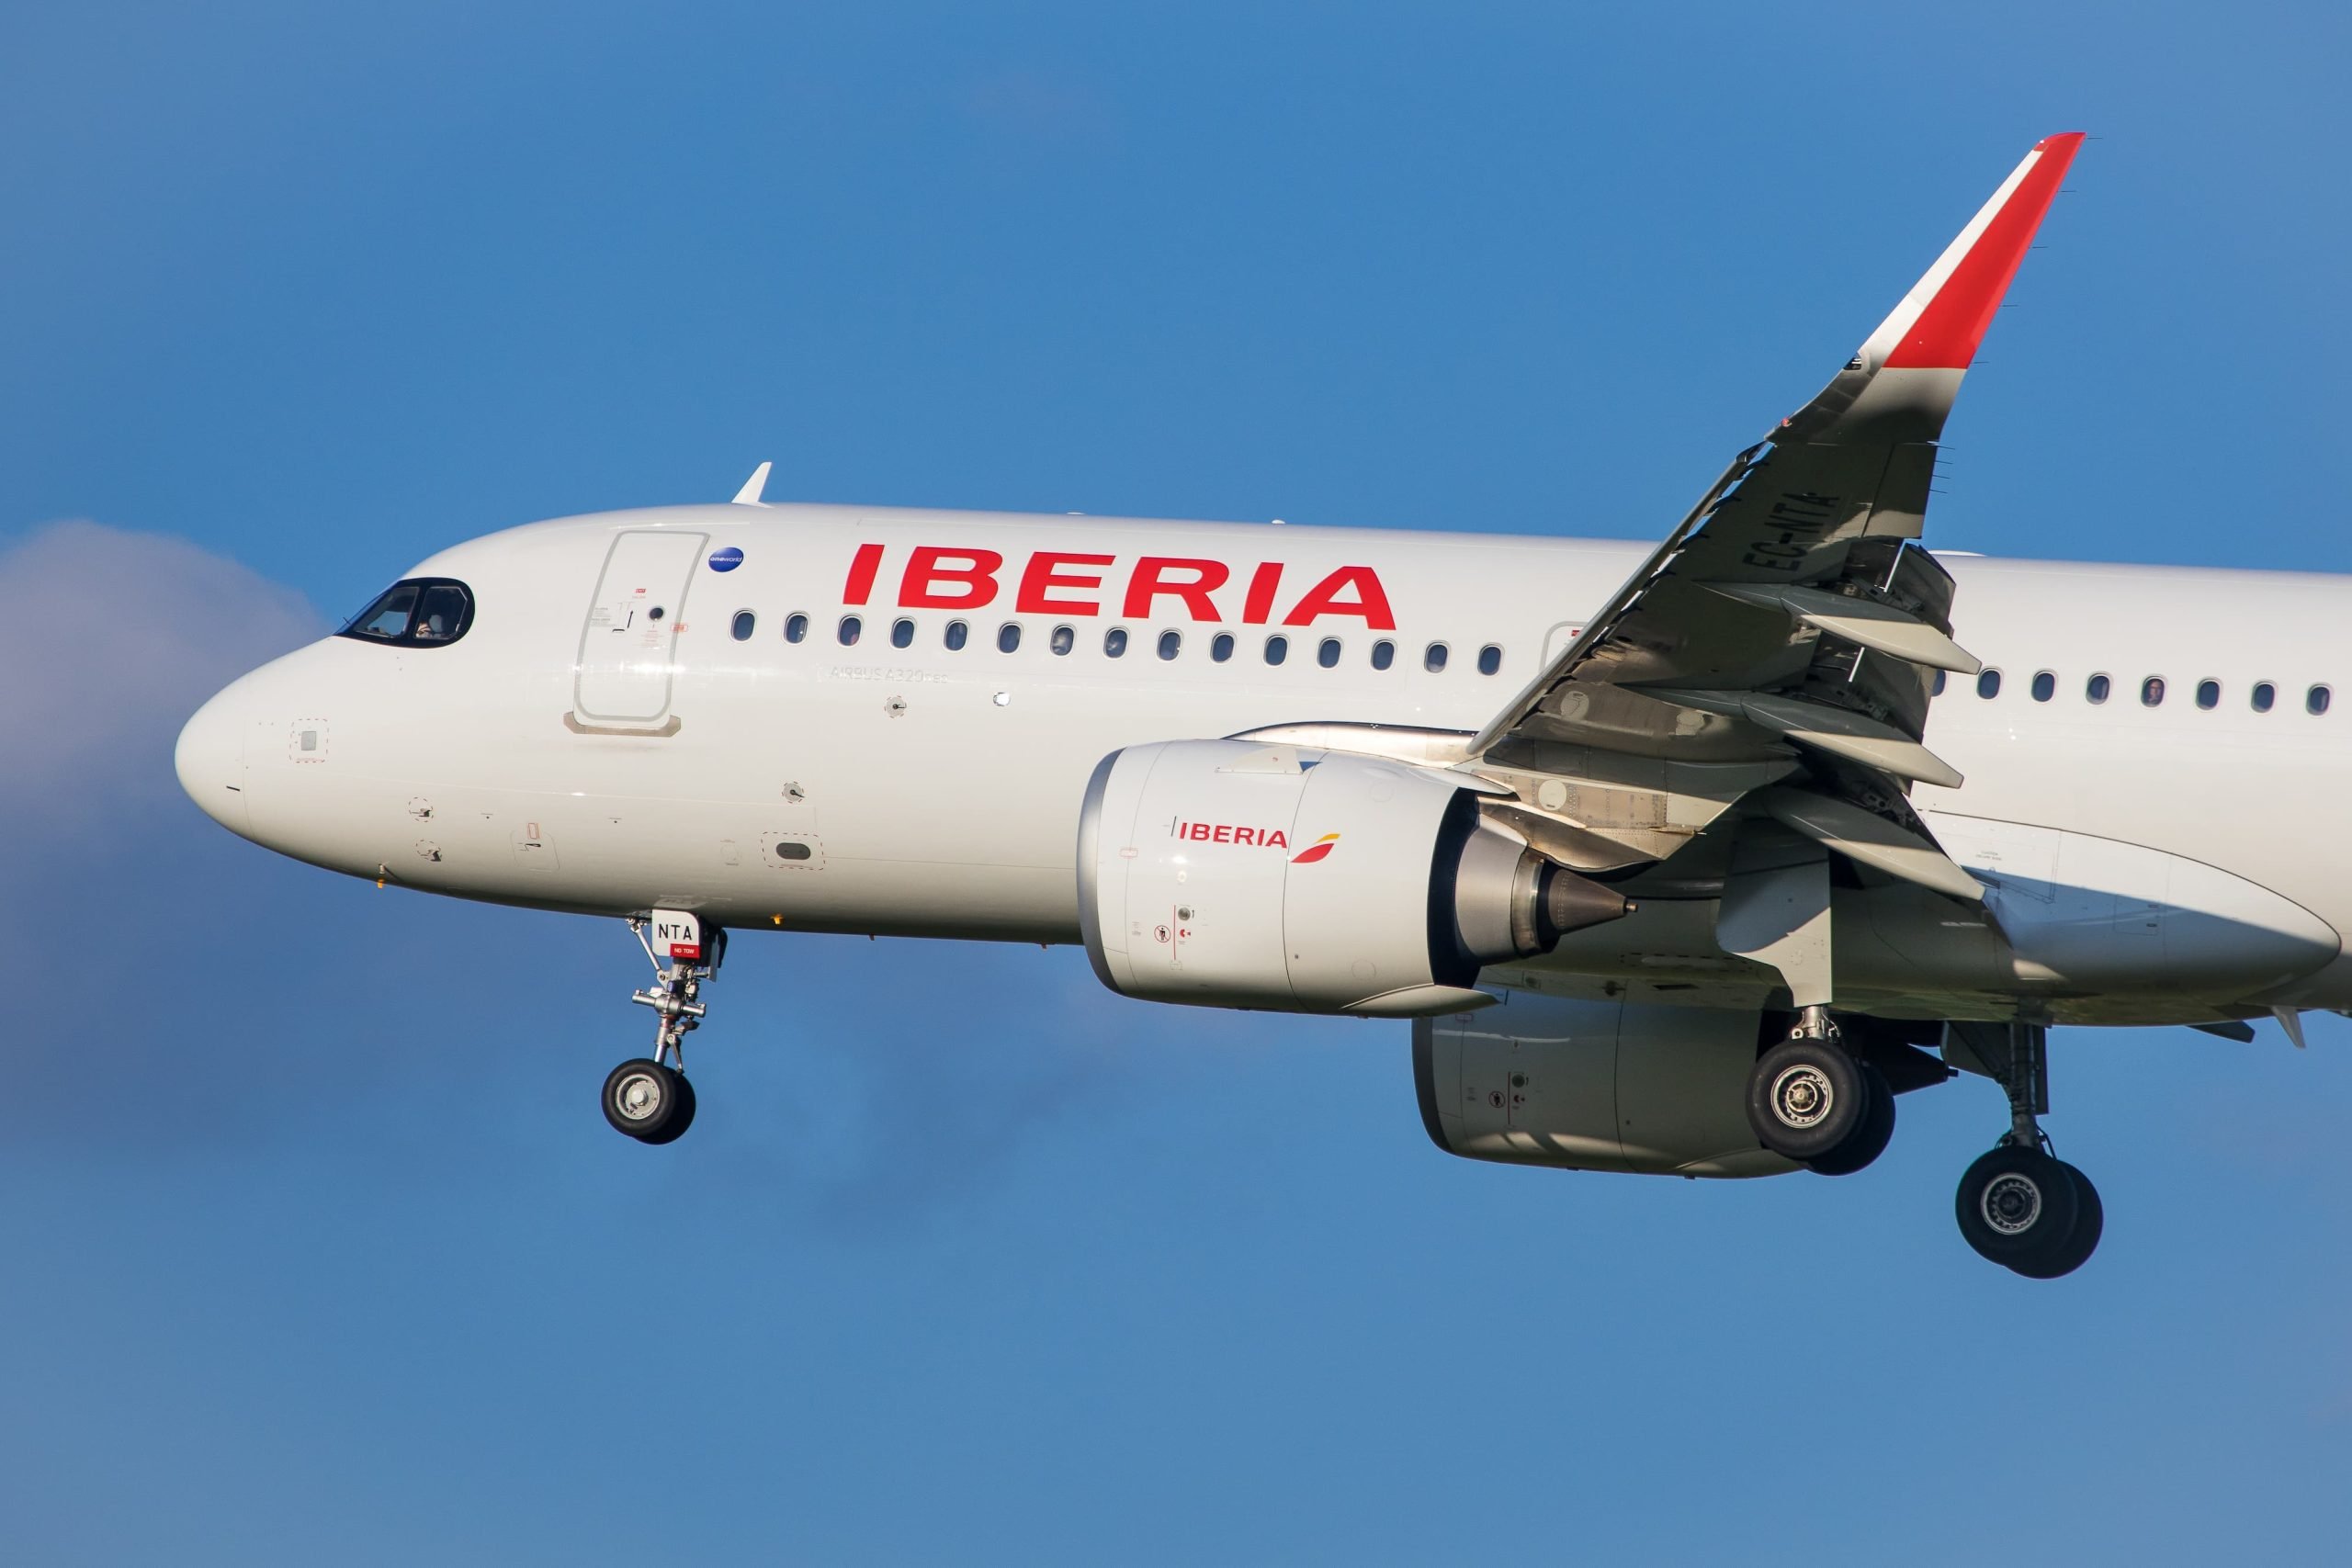 Primer plano de un avión de aterrizaje Iberia Airbus A320 aterrizando frente a cielos azules.